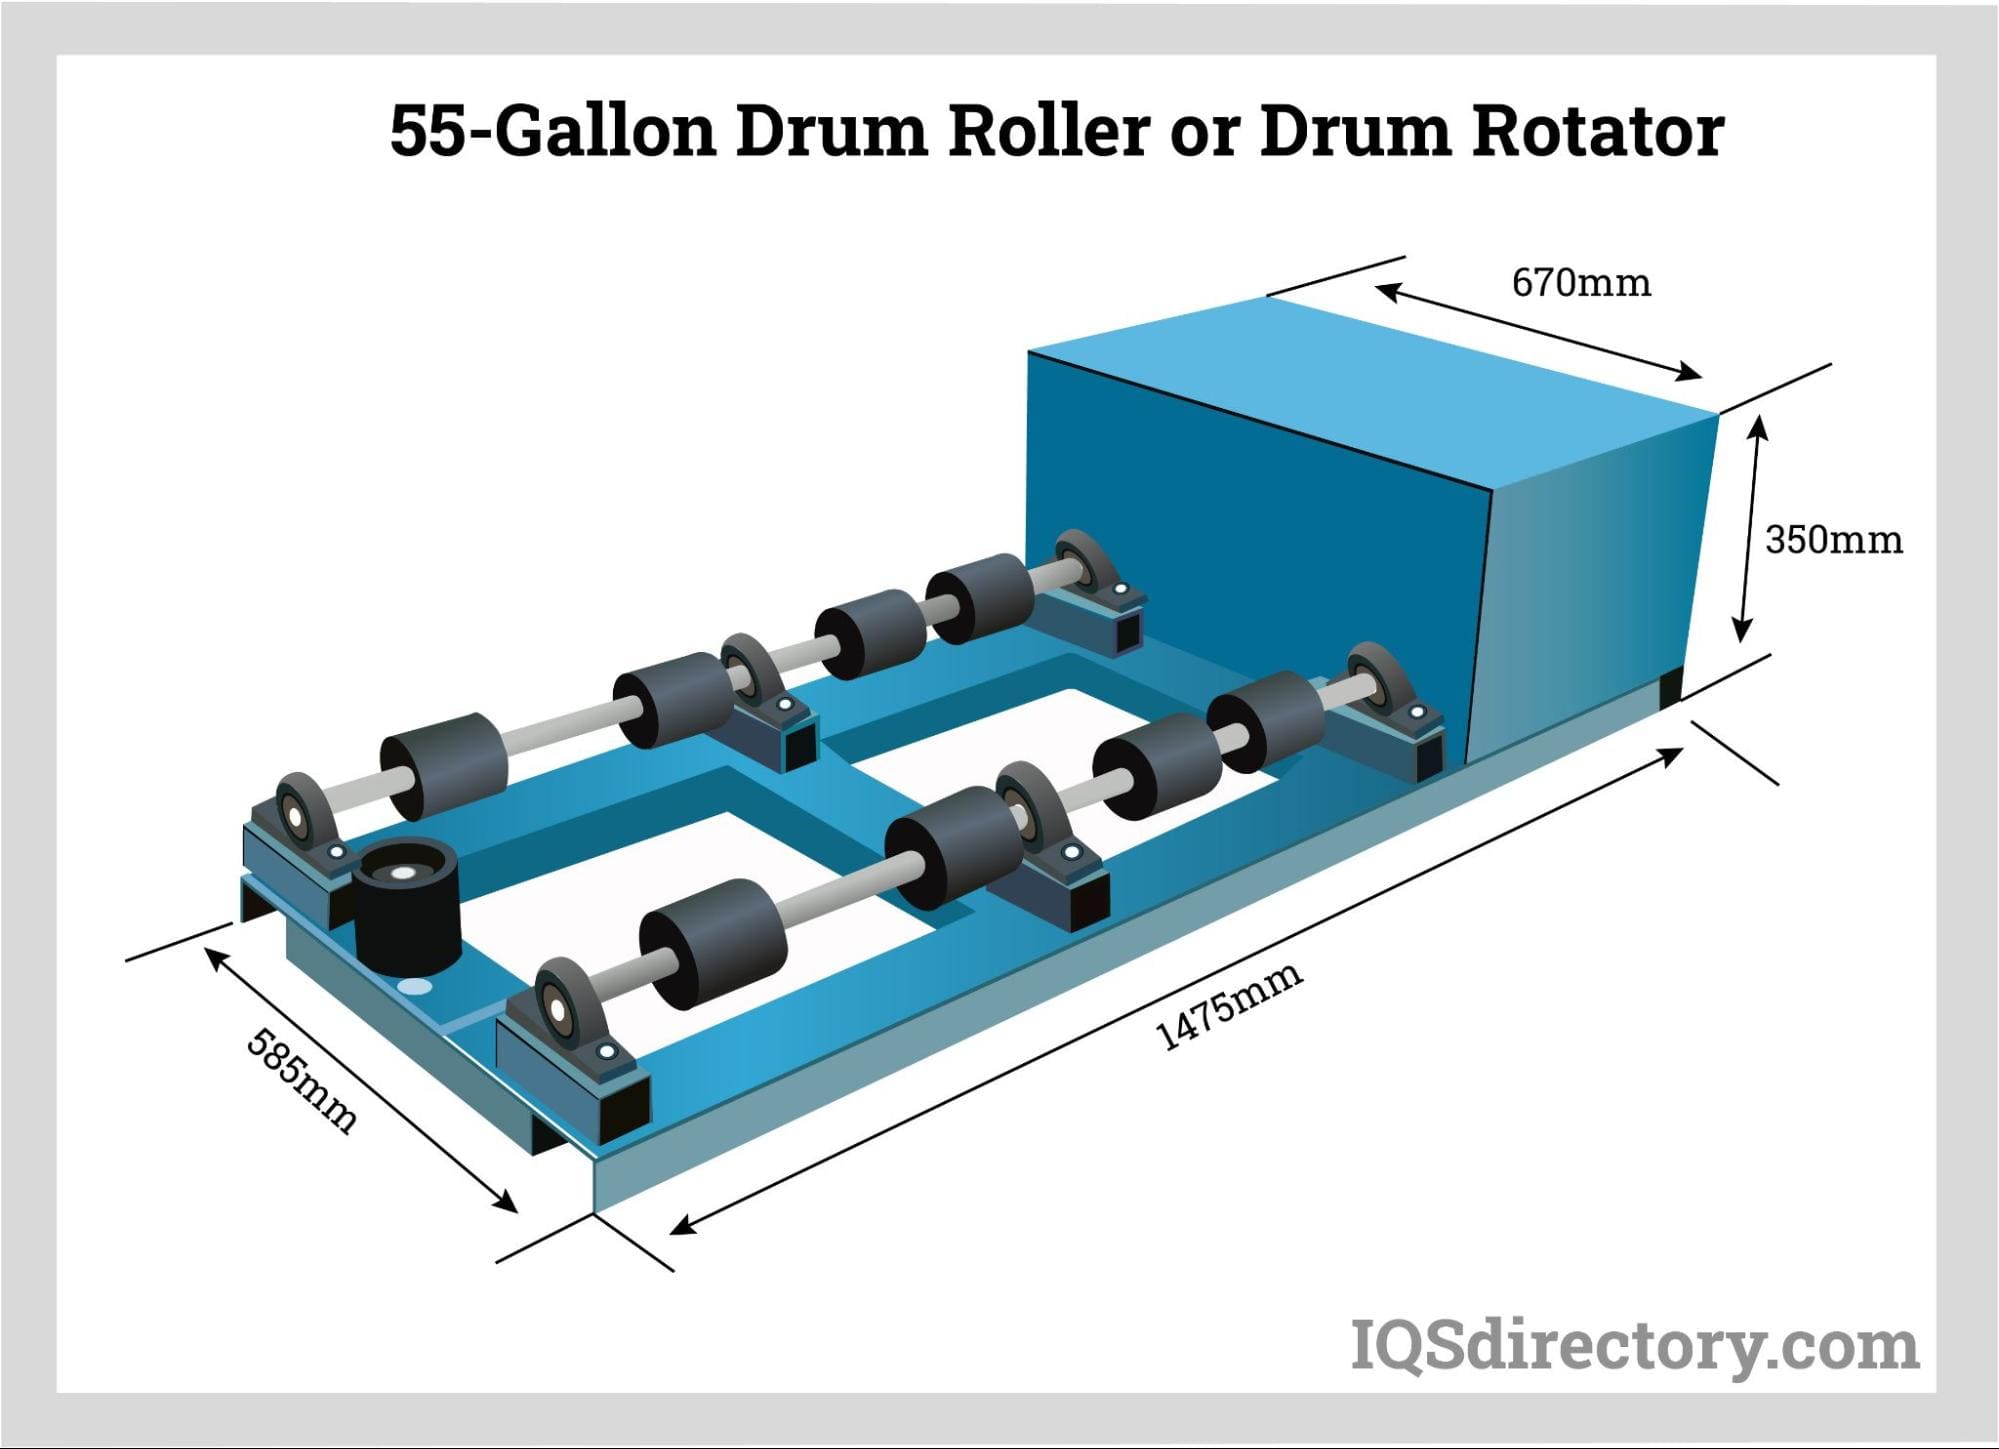 55-Gallon Drum Roller or Drum Rotator